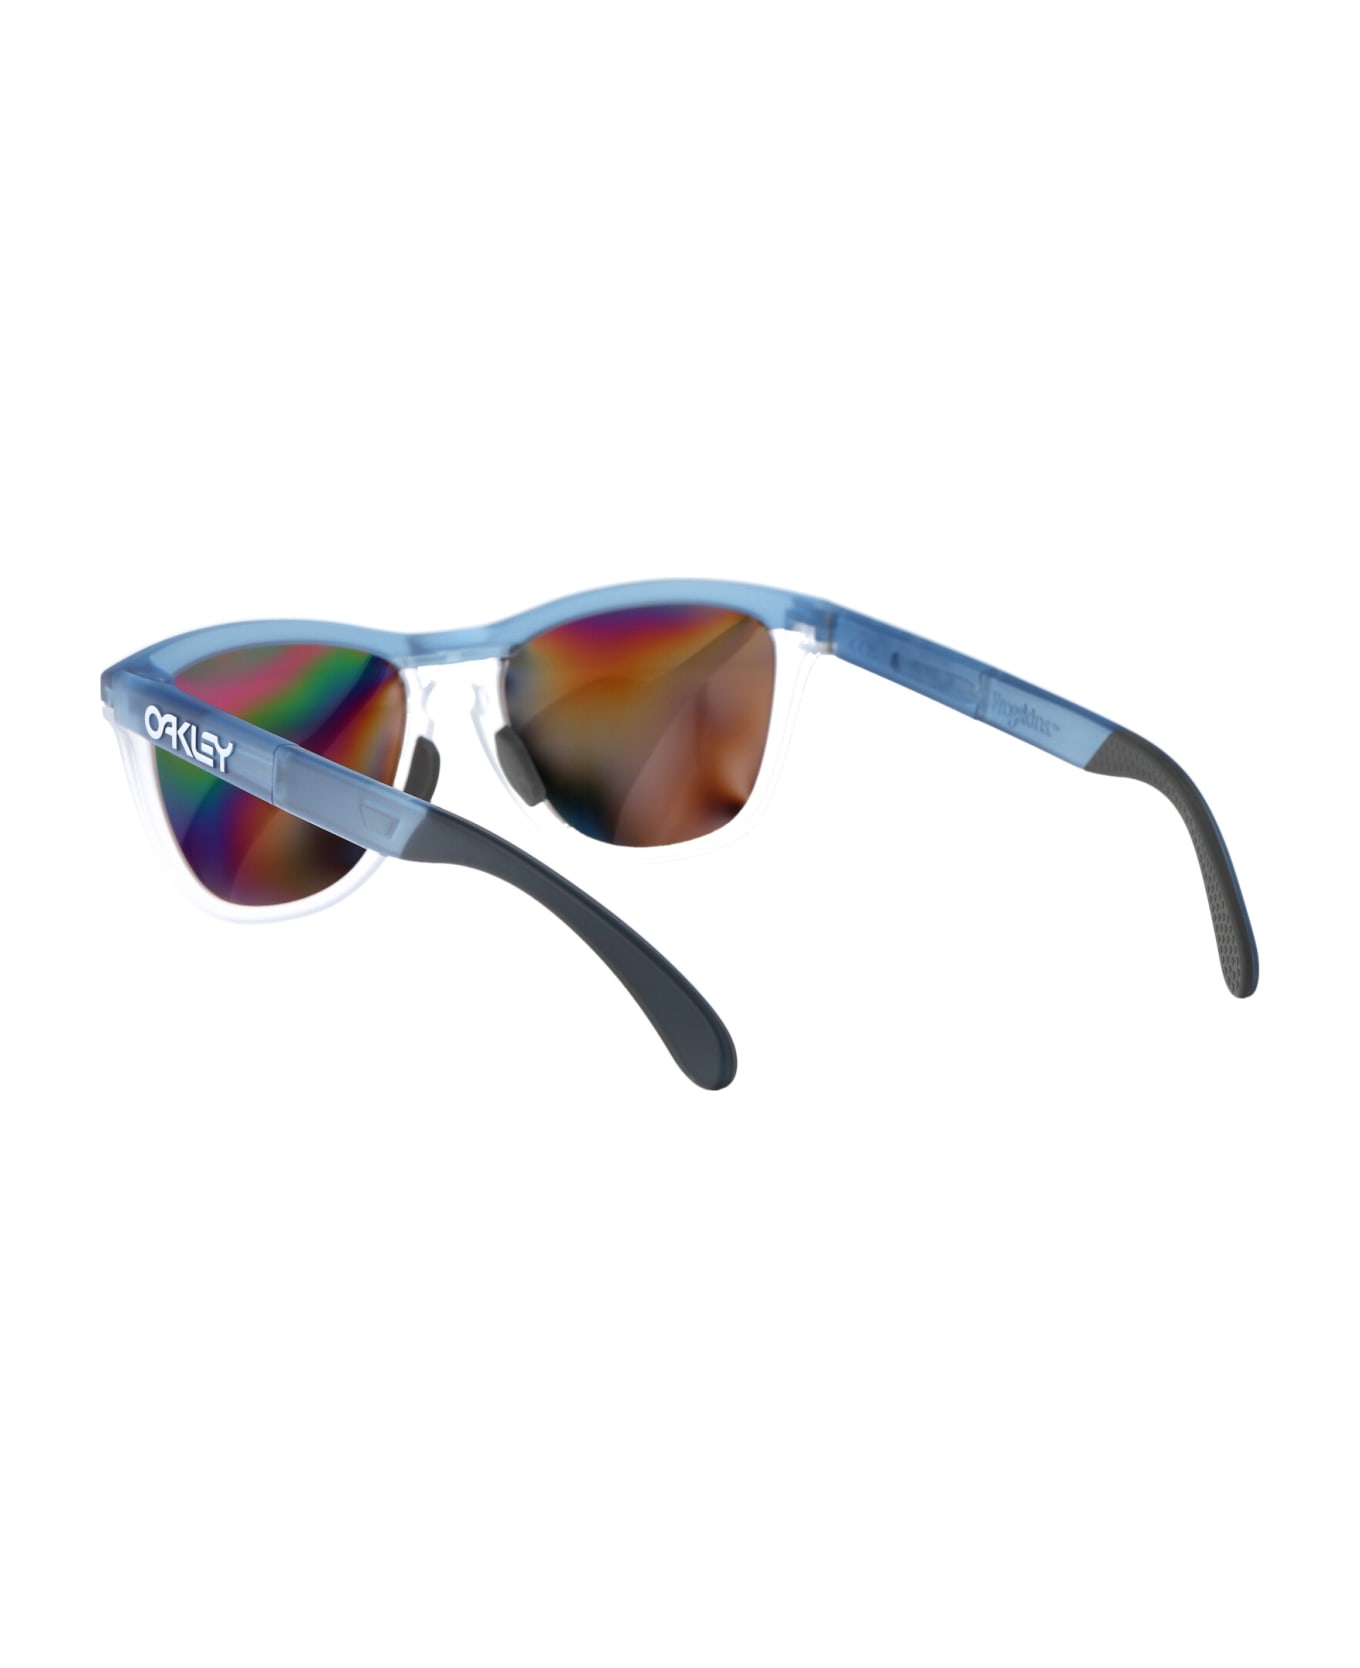 Oakley Frogskins Range Sunglasses - Light blue/light blue